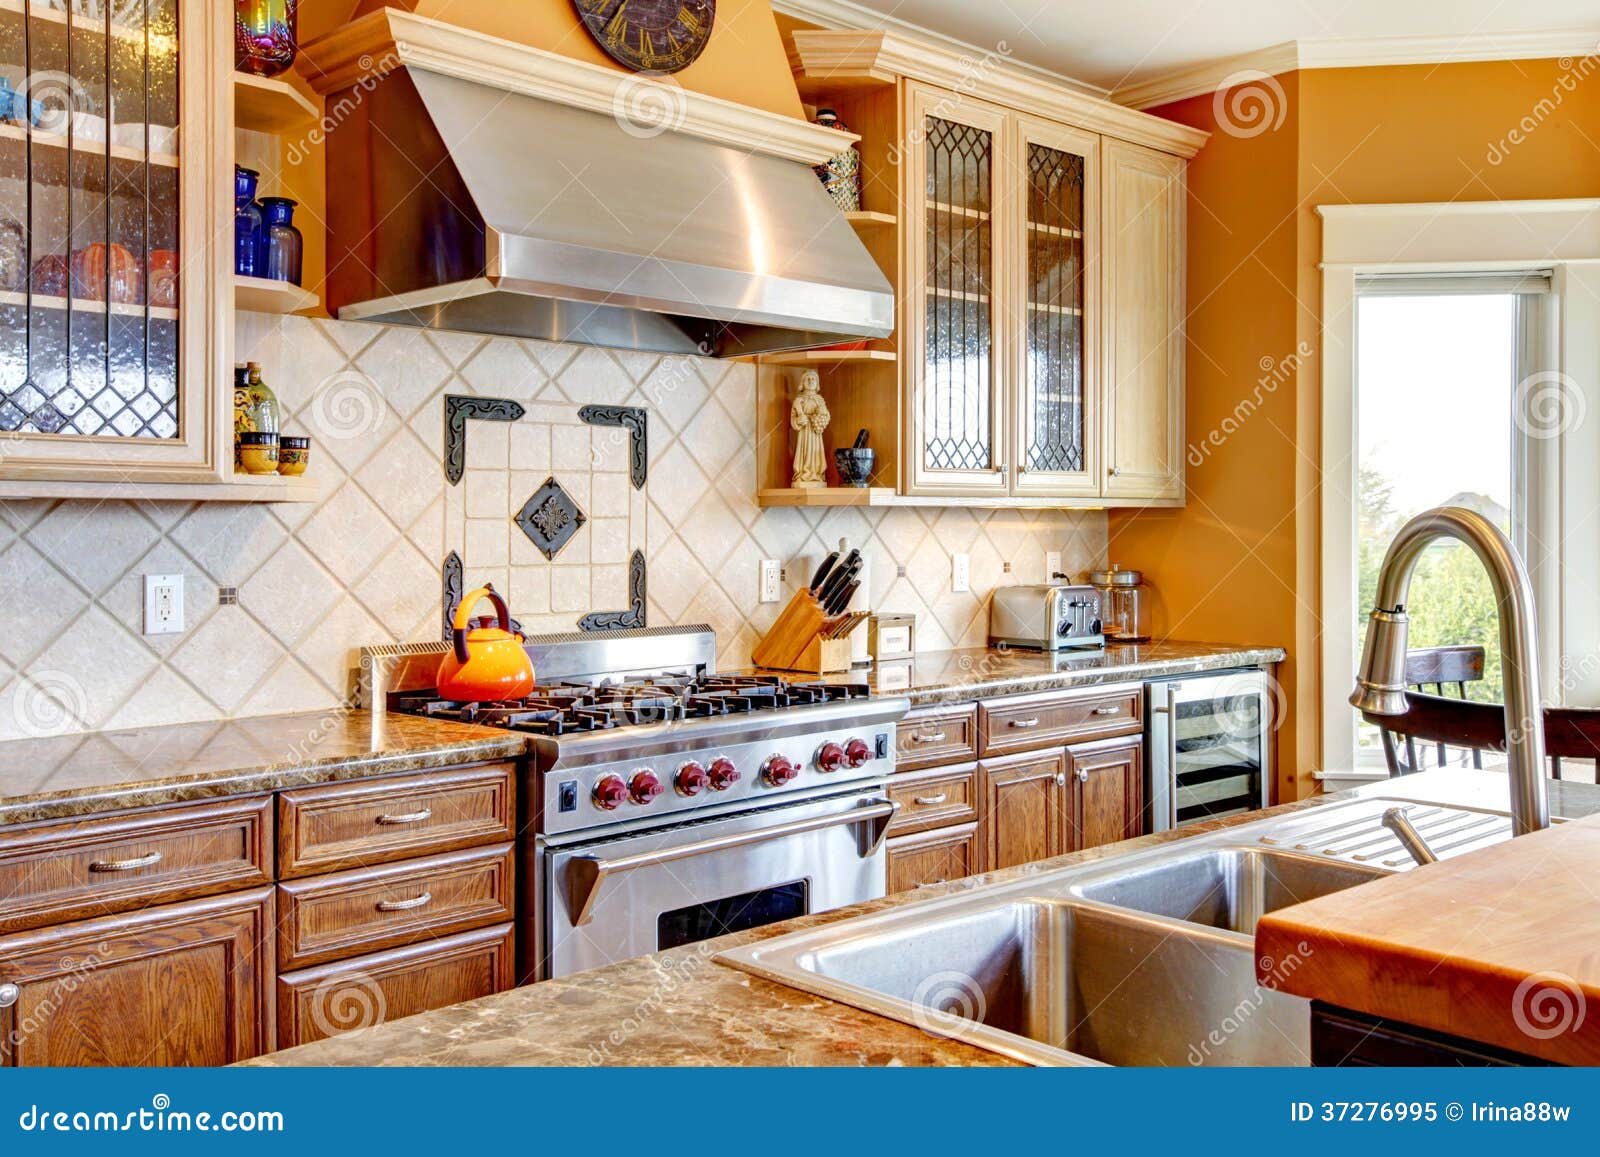 Wood Kitchen Room With Decorated Tile Backsplash Royalty Free 